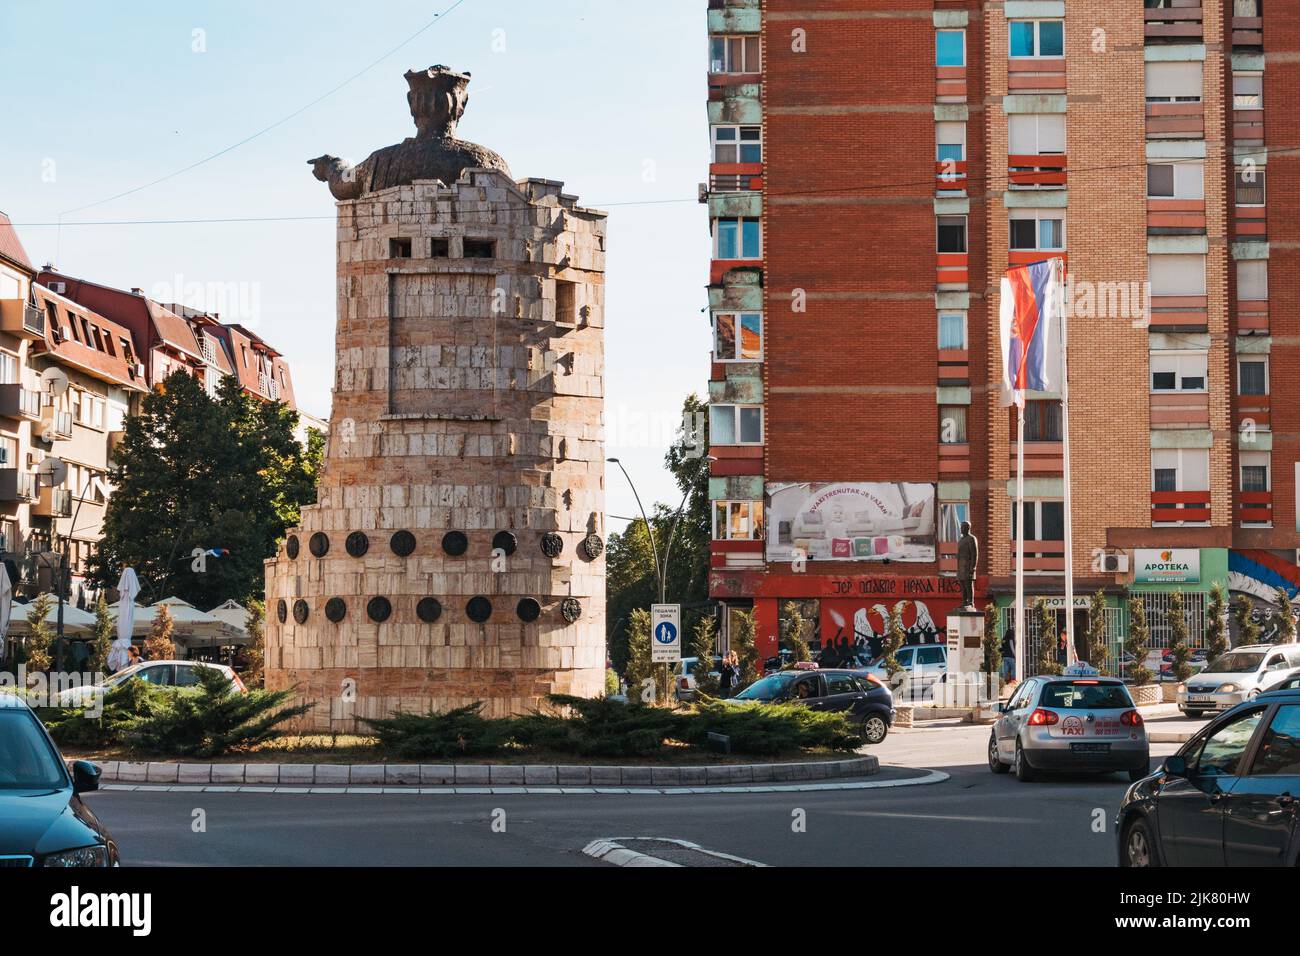 a large statue of Prince Lazar of Serbia in North Kosovska Mitrovica, a Serbian enclave in the city of Mitrovica, Kosovo Stock Photo